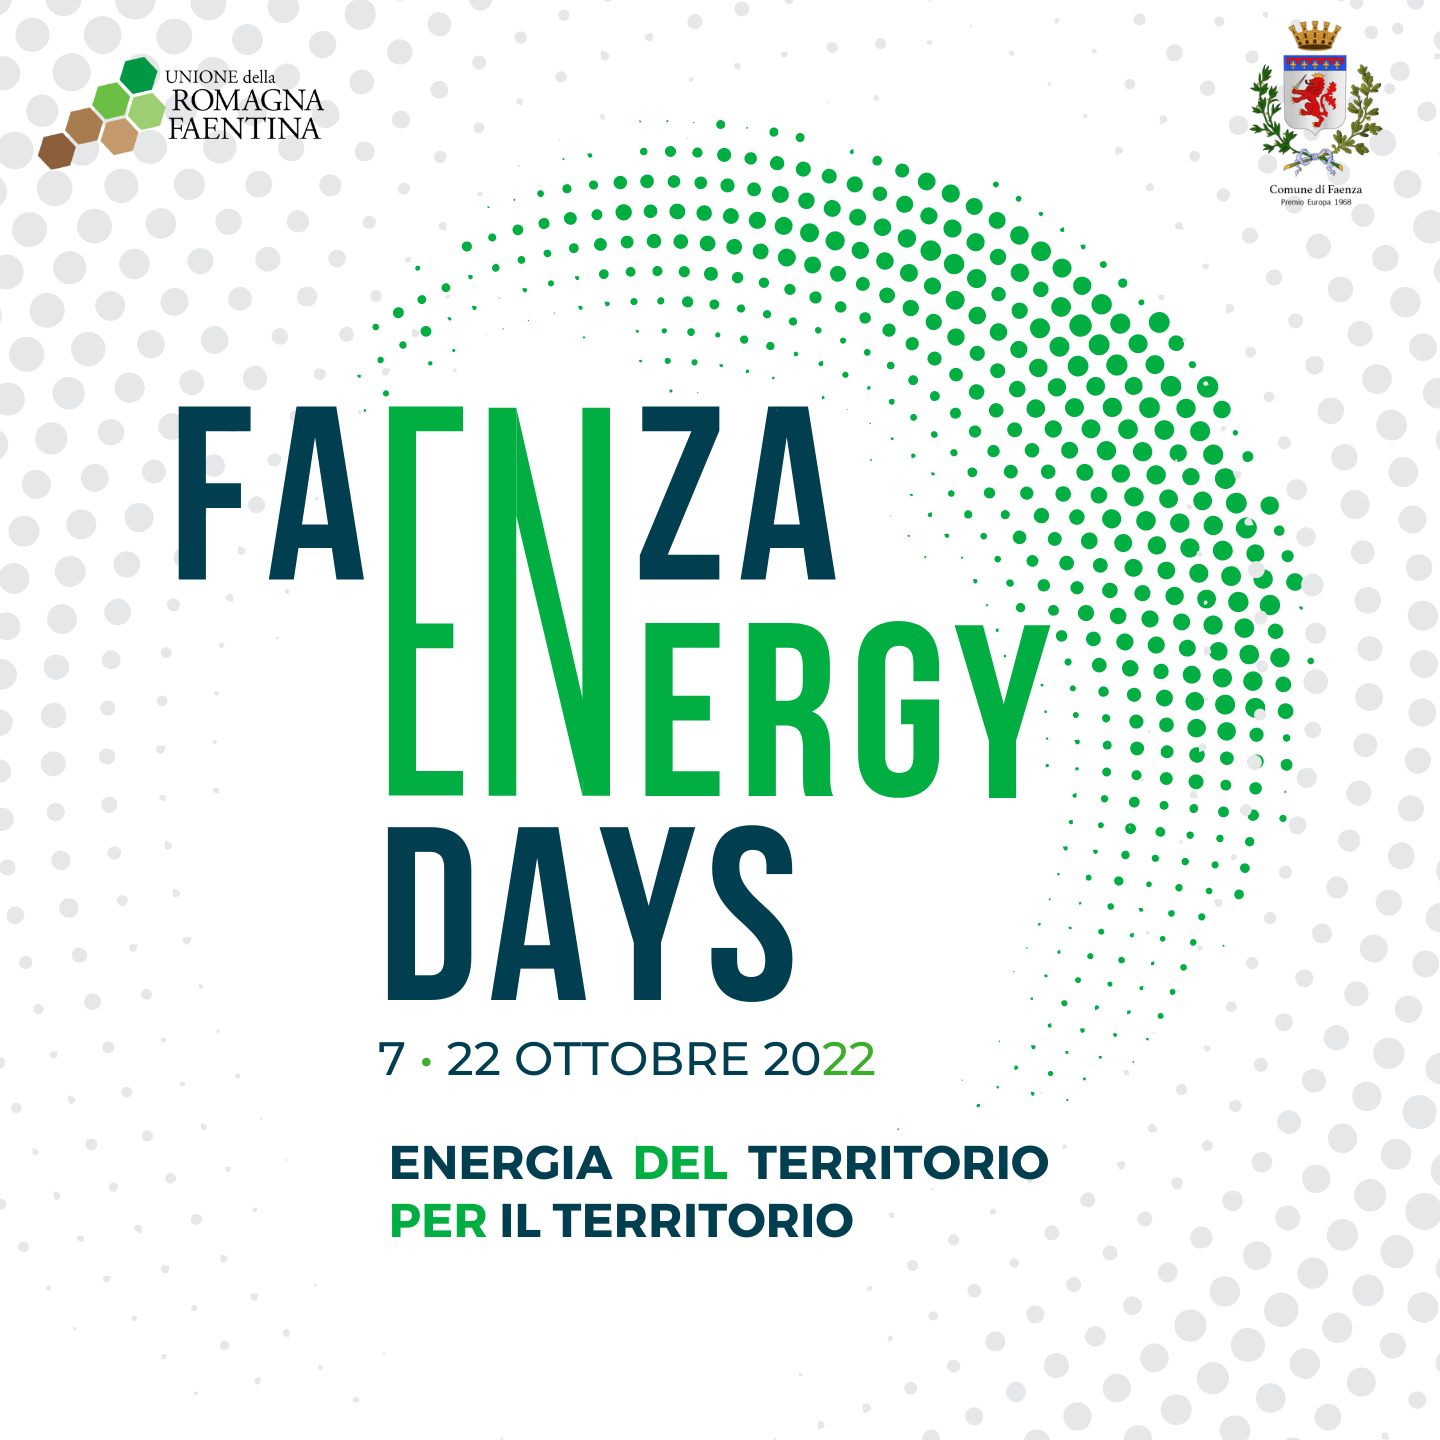 Tornano gli energy days a Faenza